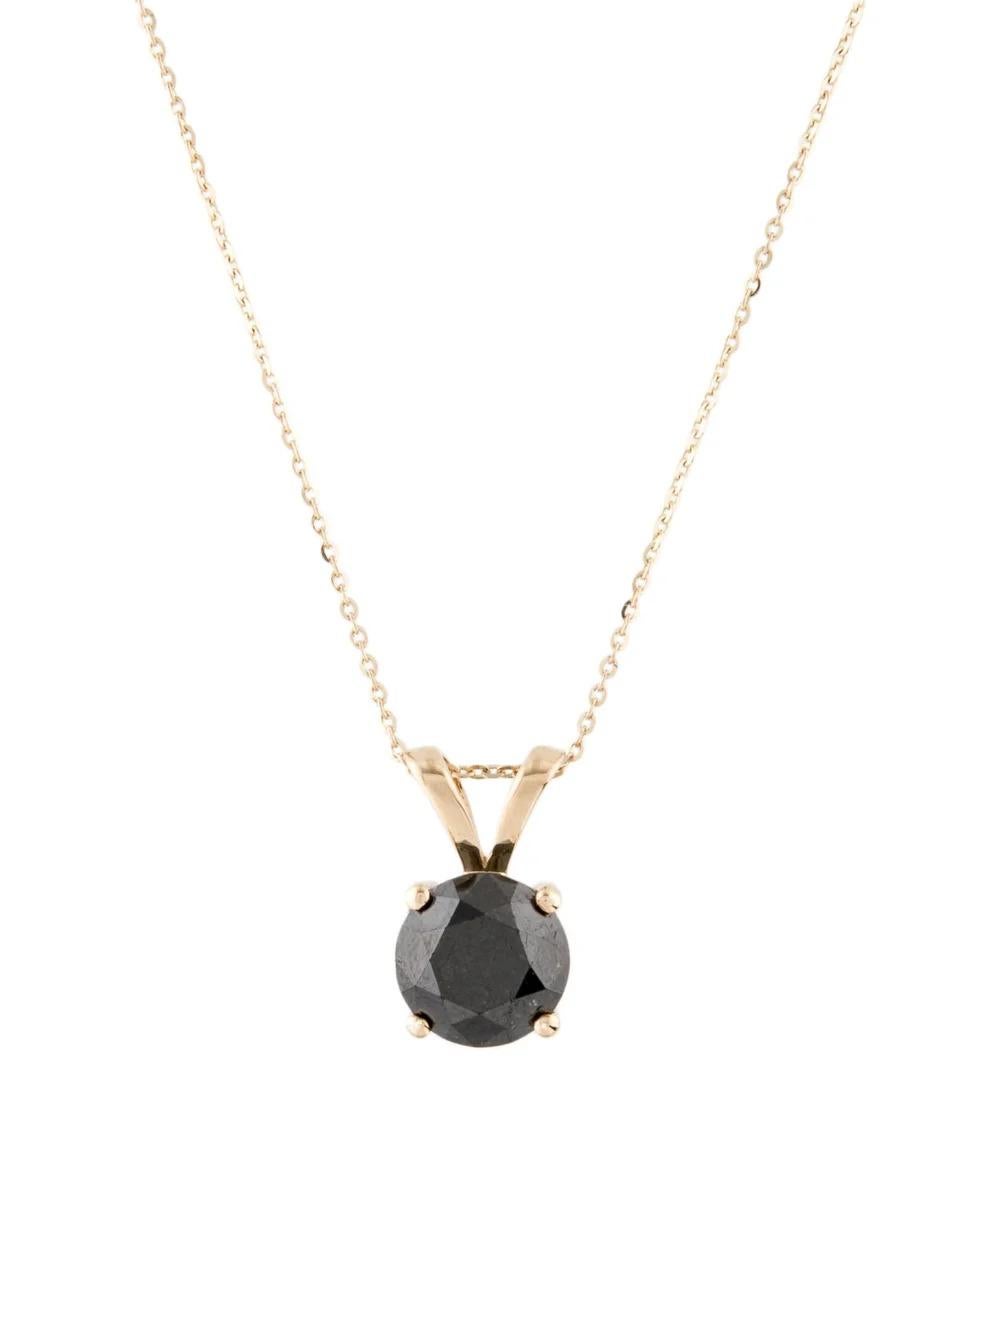 14K Diamond Pendant Necklace, 3.77ctw - Stunning Statement Jewelry, Luxury Piece For Sale